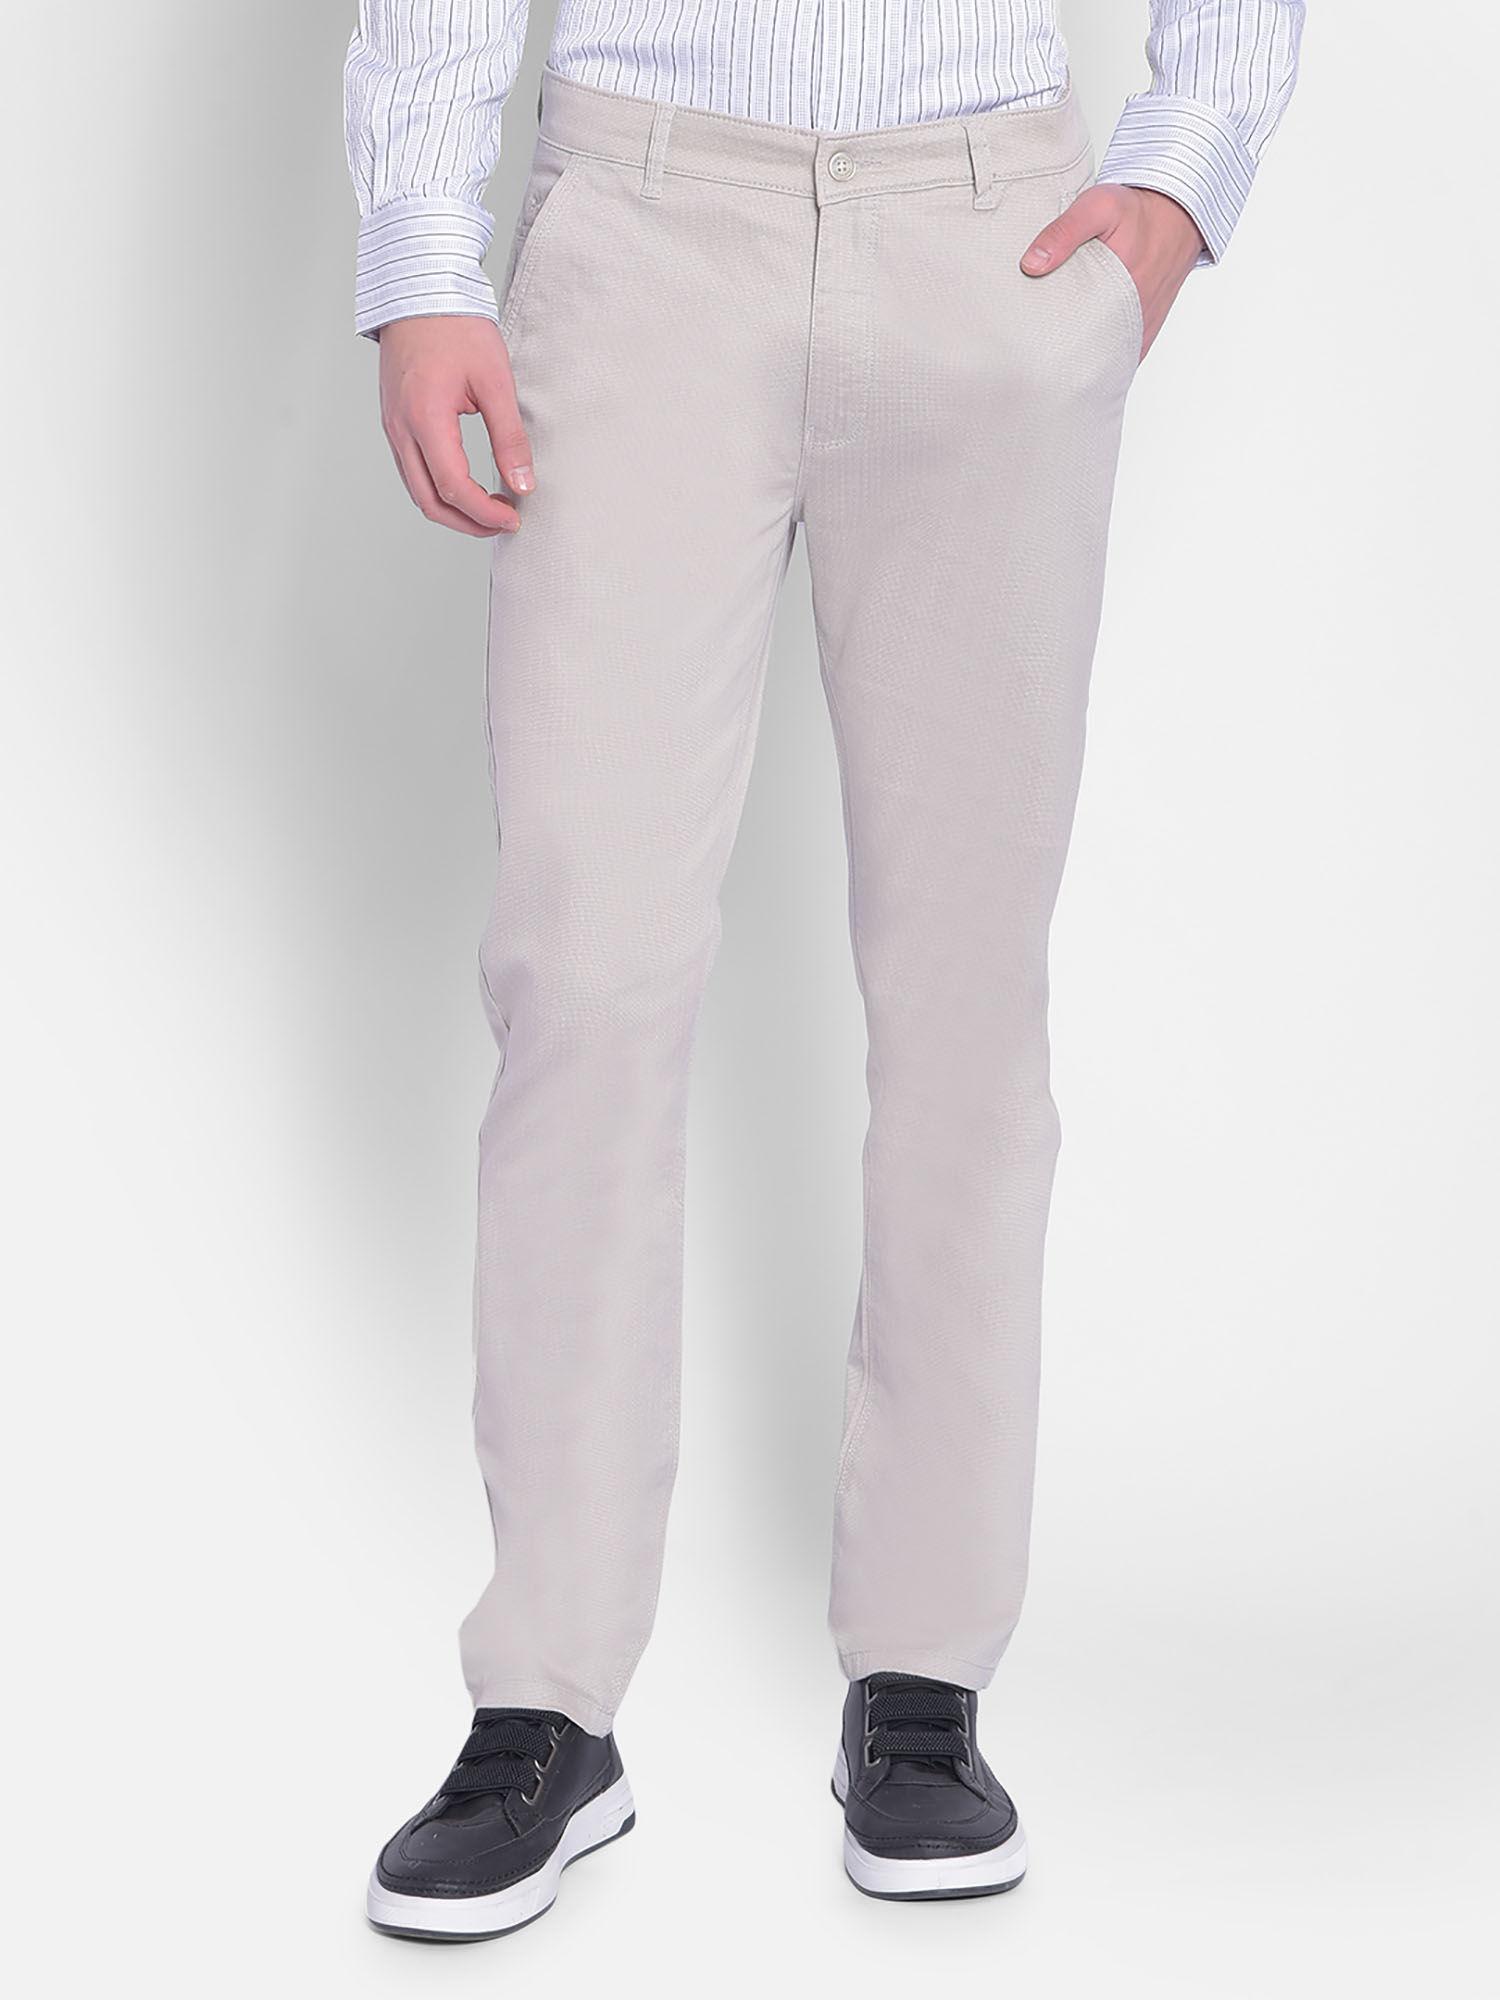 mens-grey-trousers